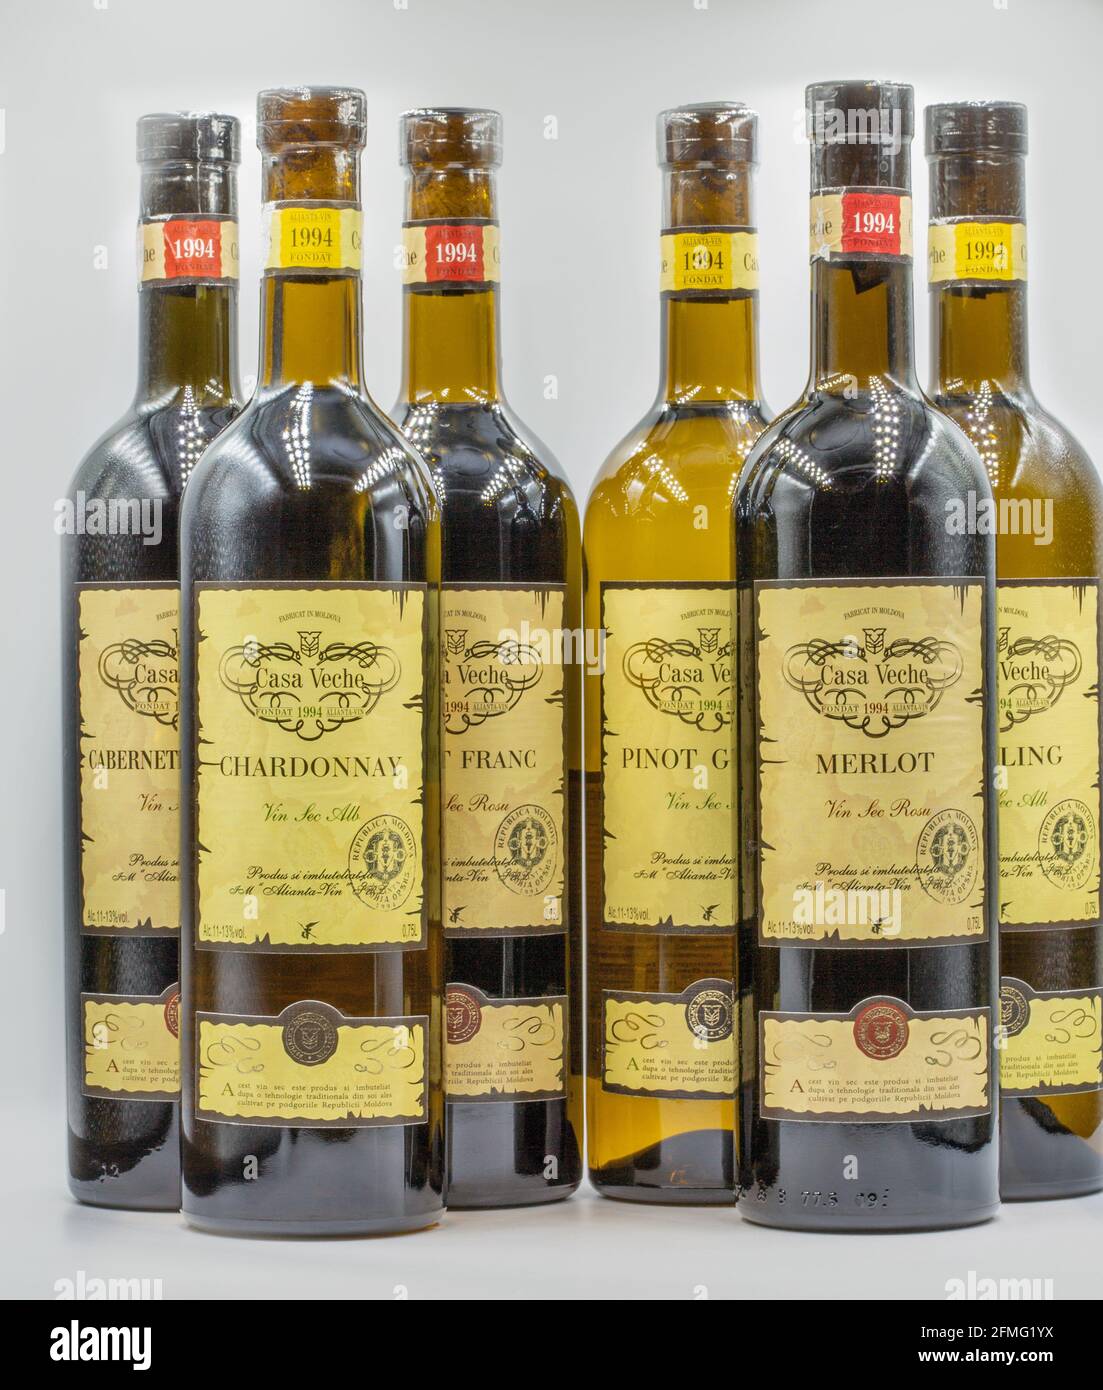 KYIV, UKRAINE - FEBRUARY 27, 2021: Riesling, Chardonnay, Pinot Grigio, Pinot Franc, Merlot and Cabernet Sauvignon white and red dry wine bottles from Stock Photo